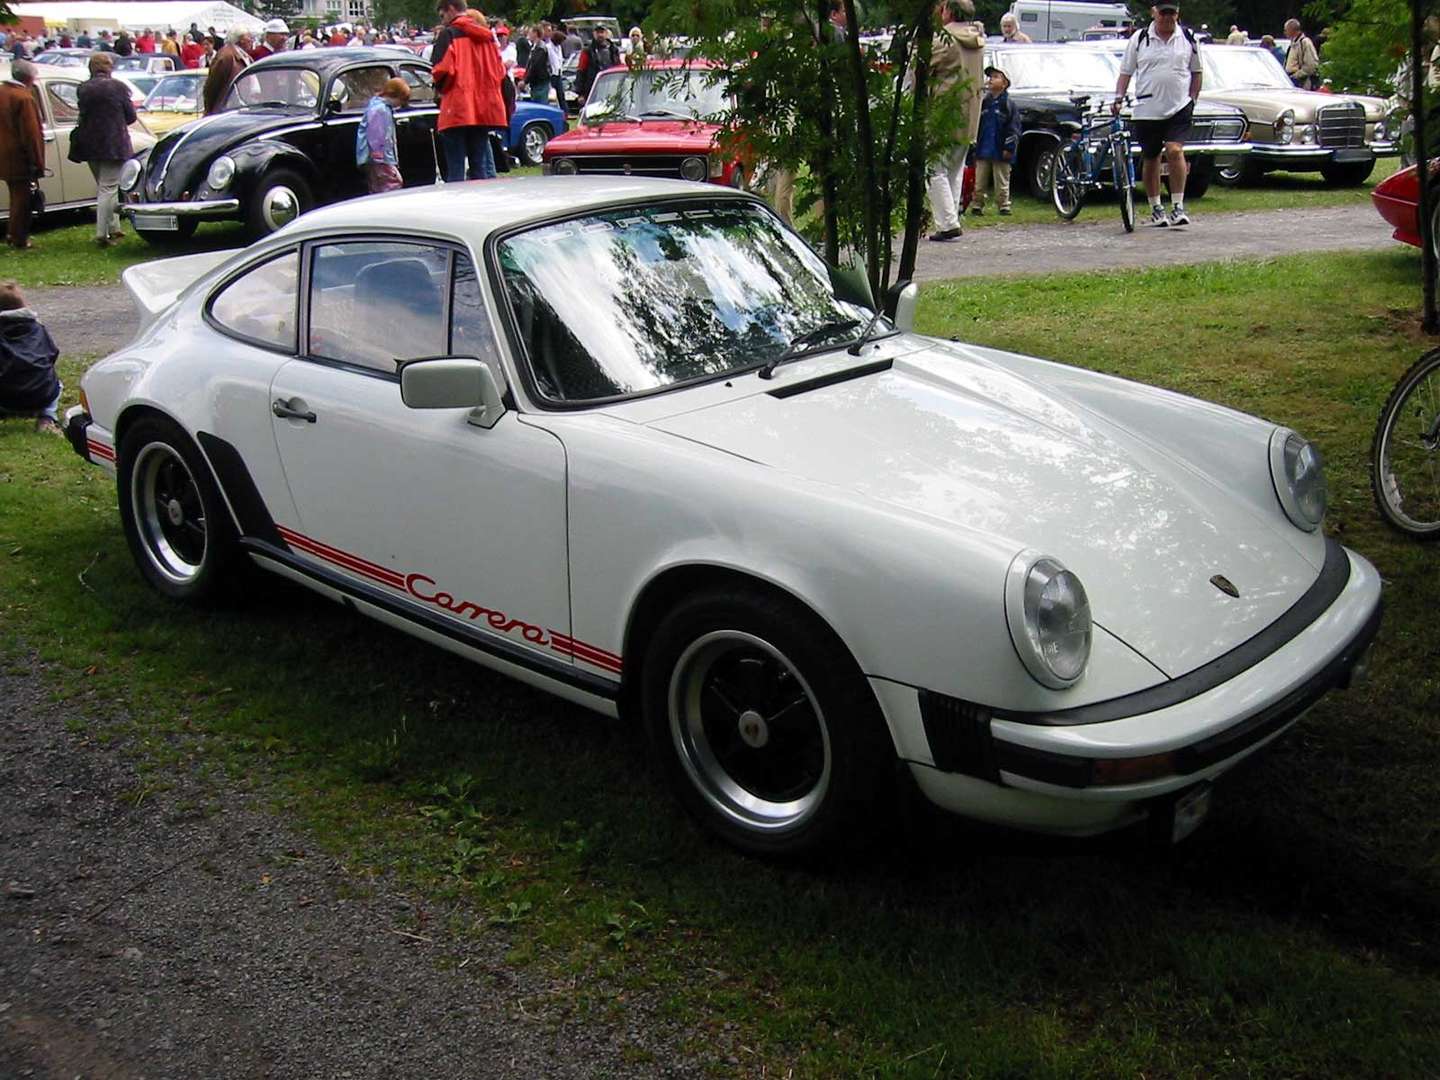 Porsche_911_Carrera